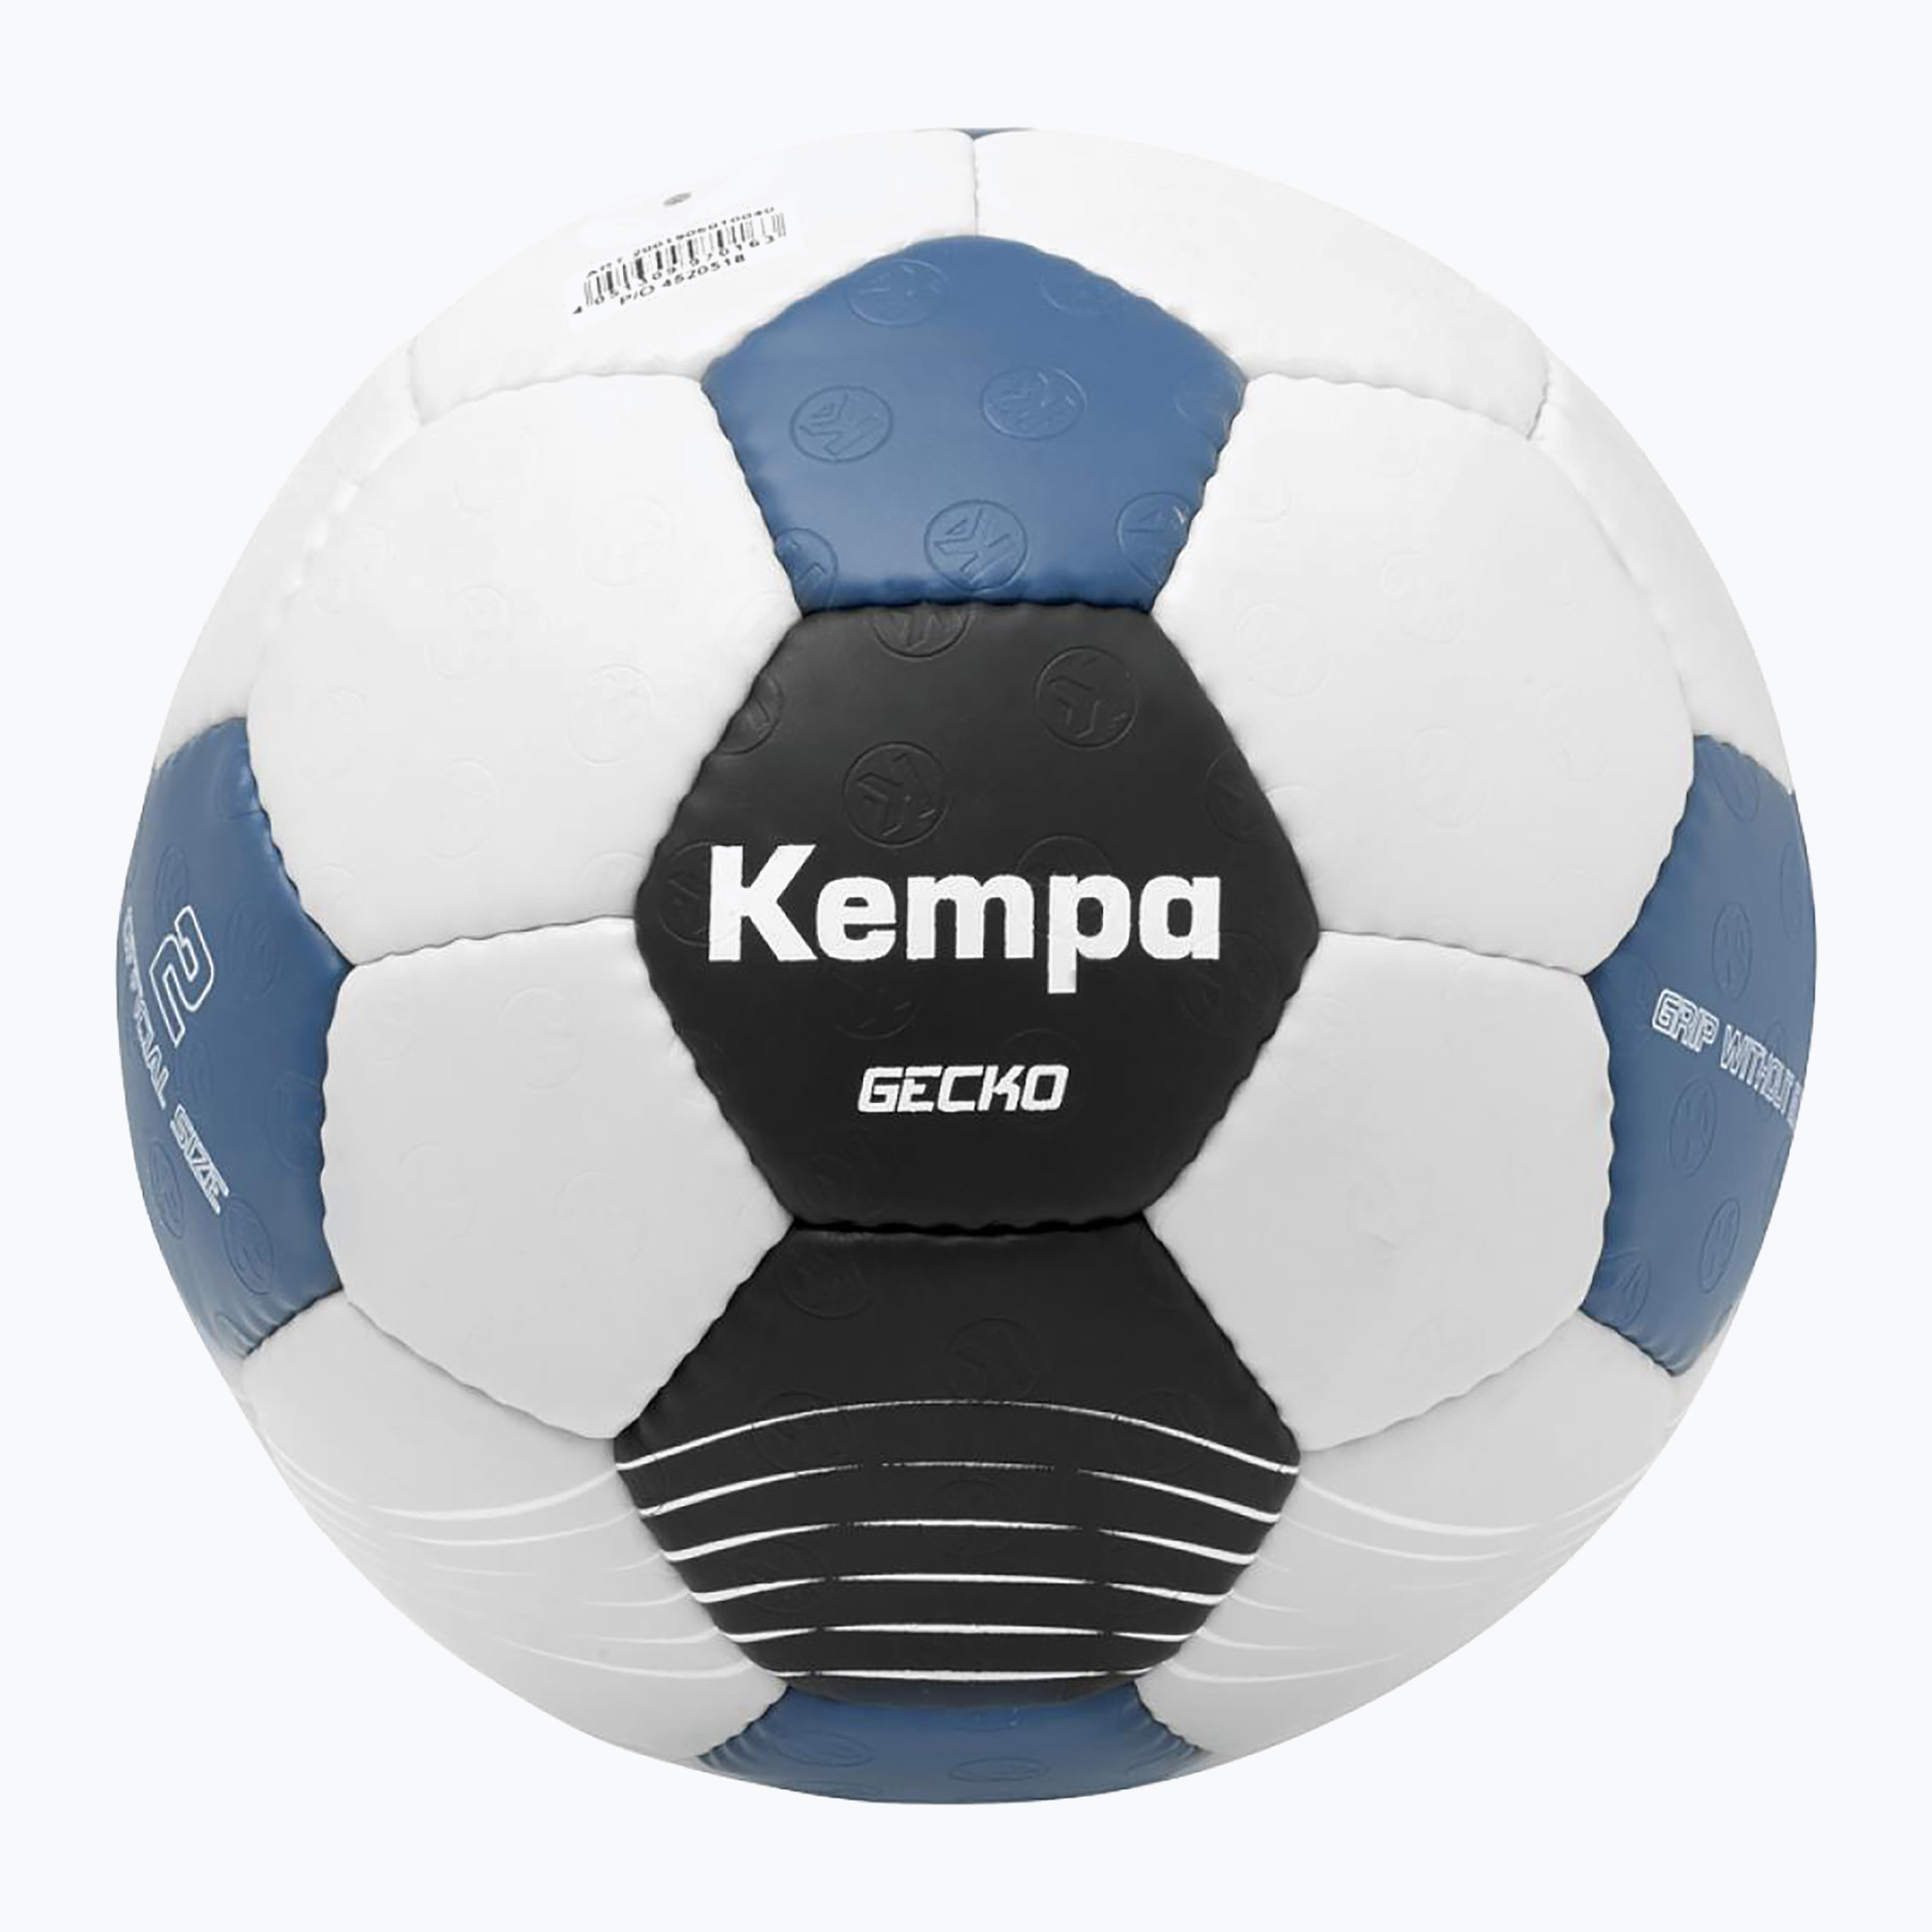 Kempa Gecko handbal 200190601/3 mărimea 3